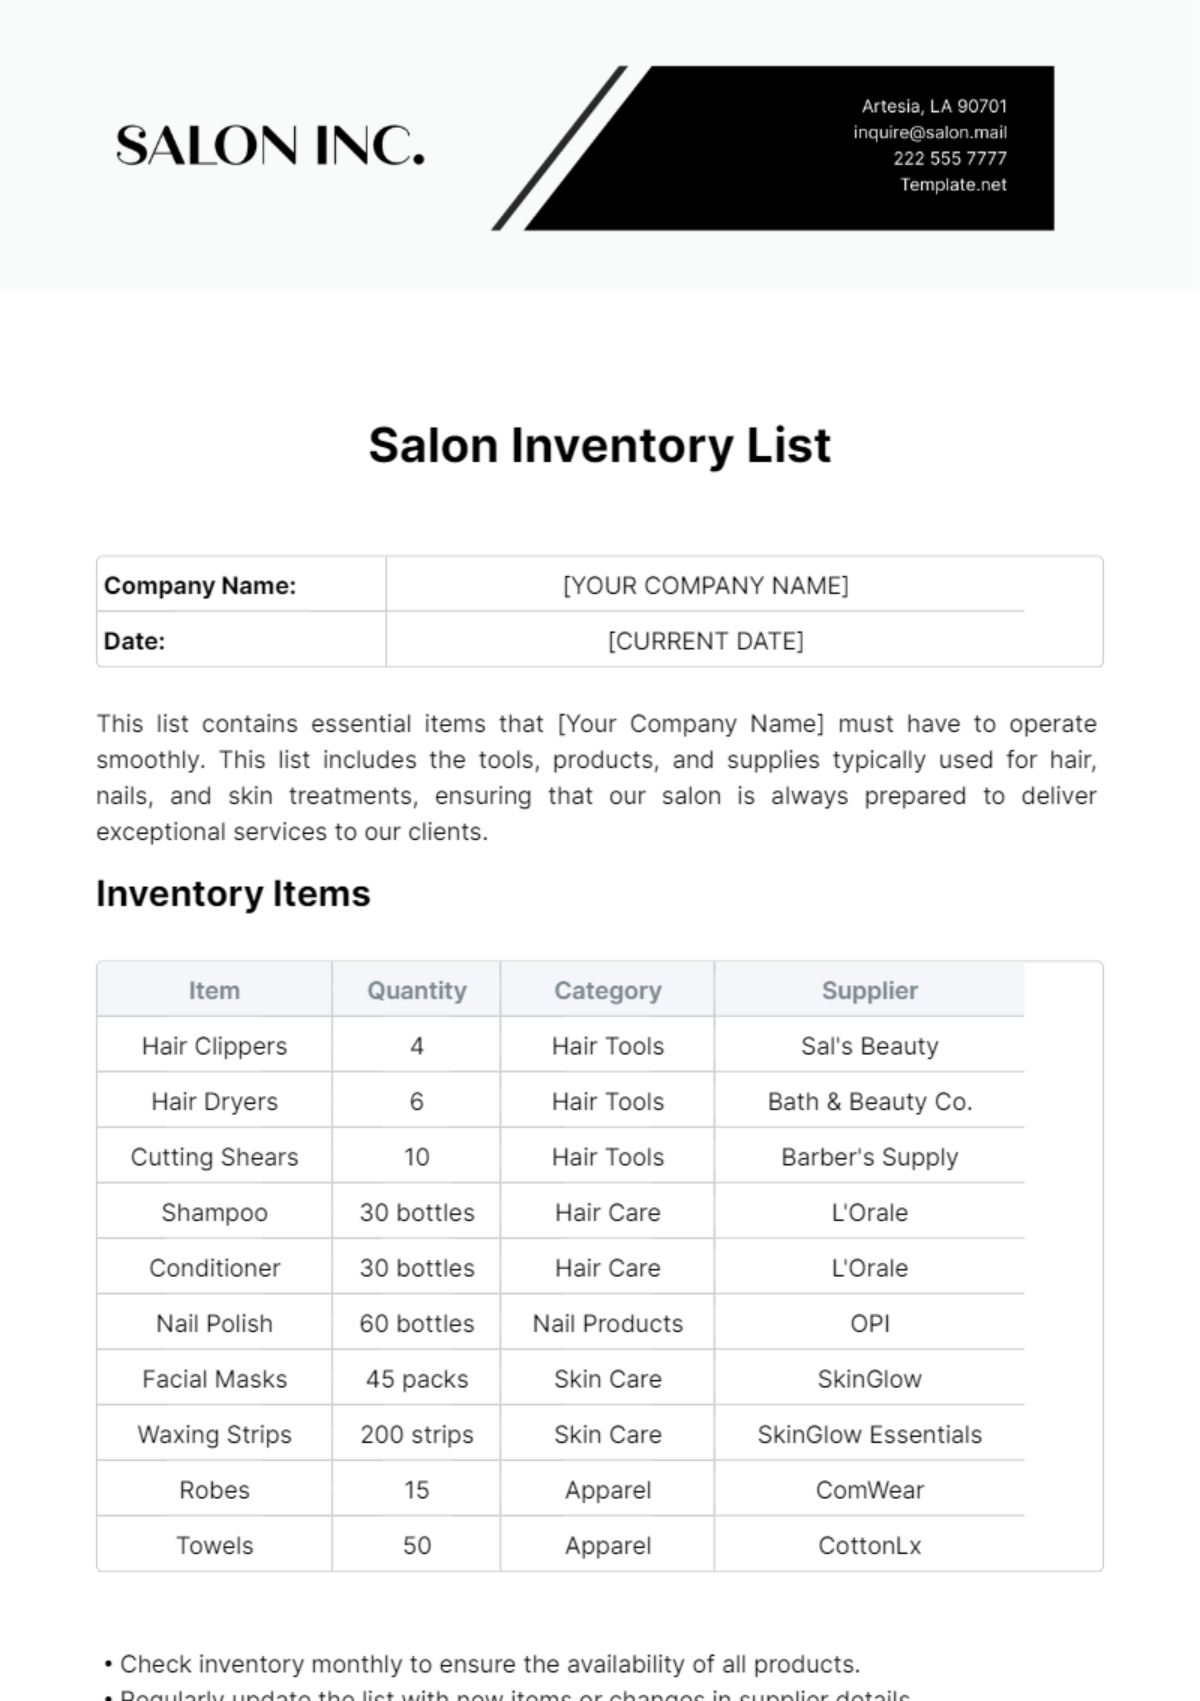 Salon Inventory List Template